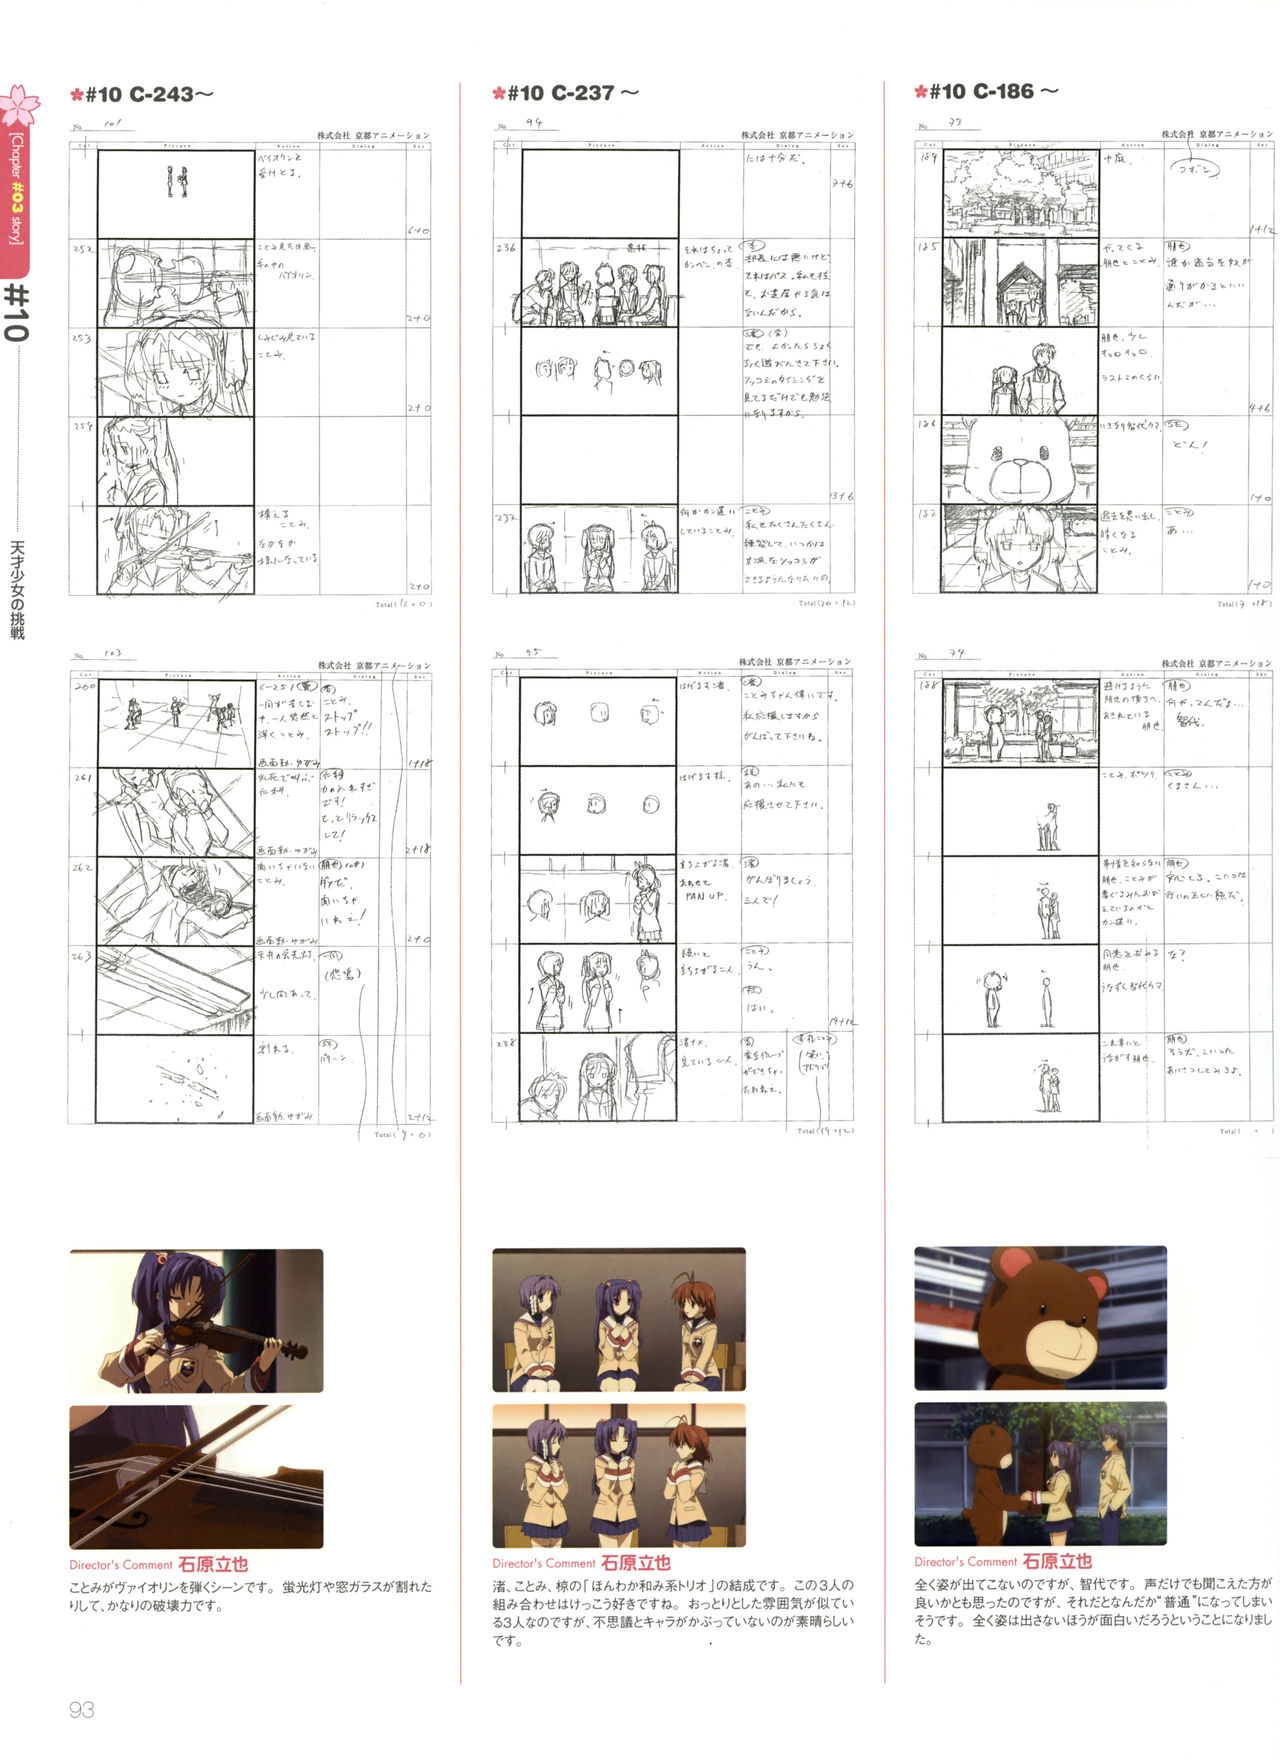 Clannad TV Animation Visual Fan Book 96